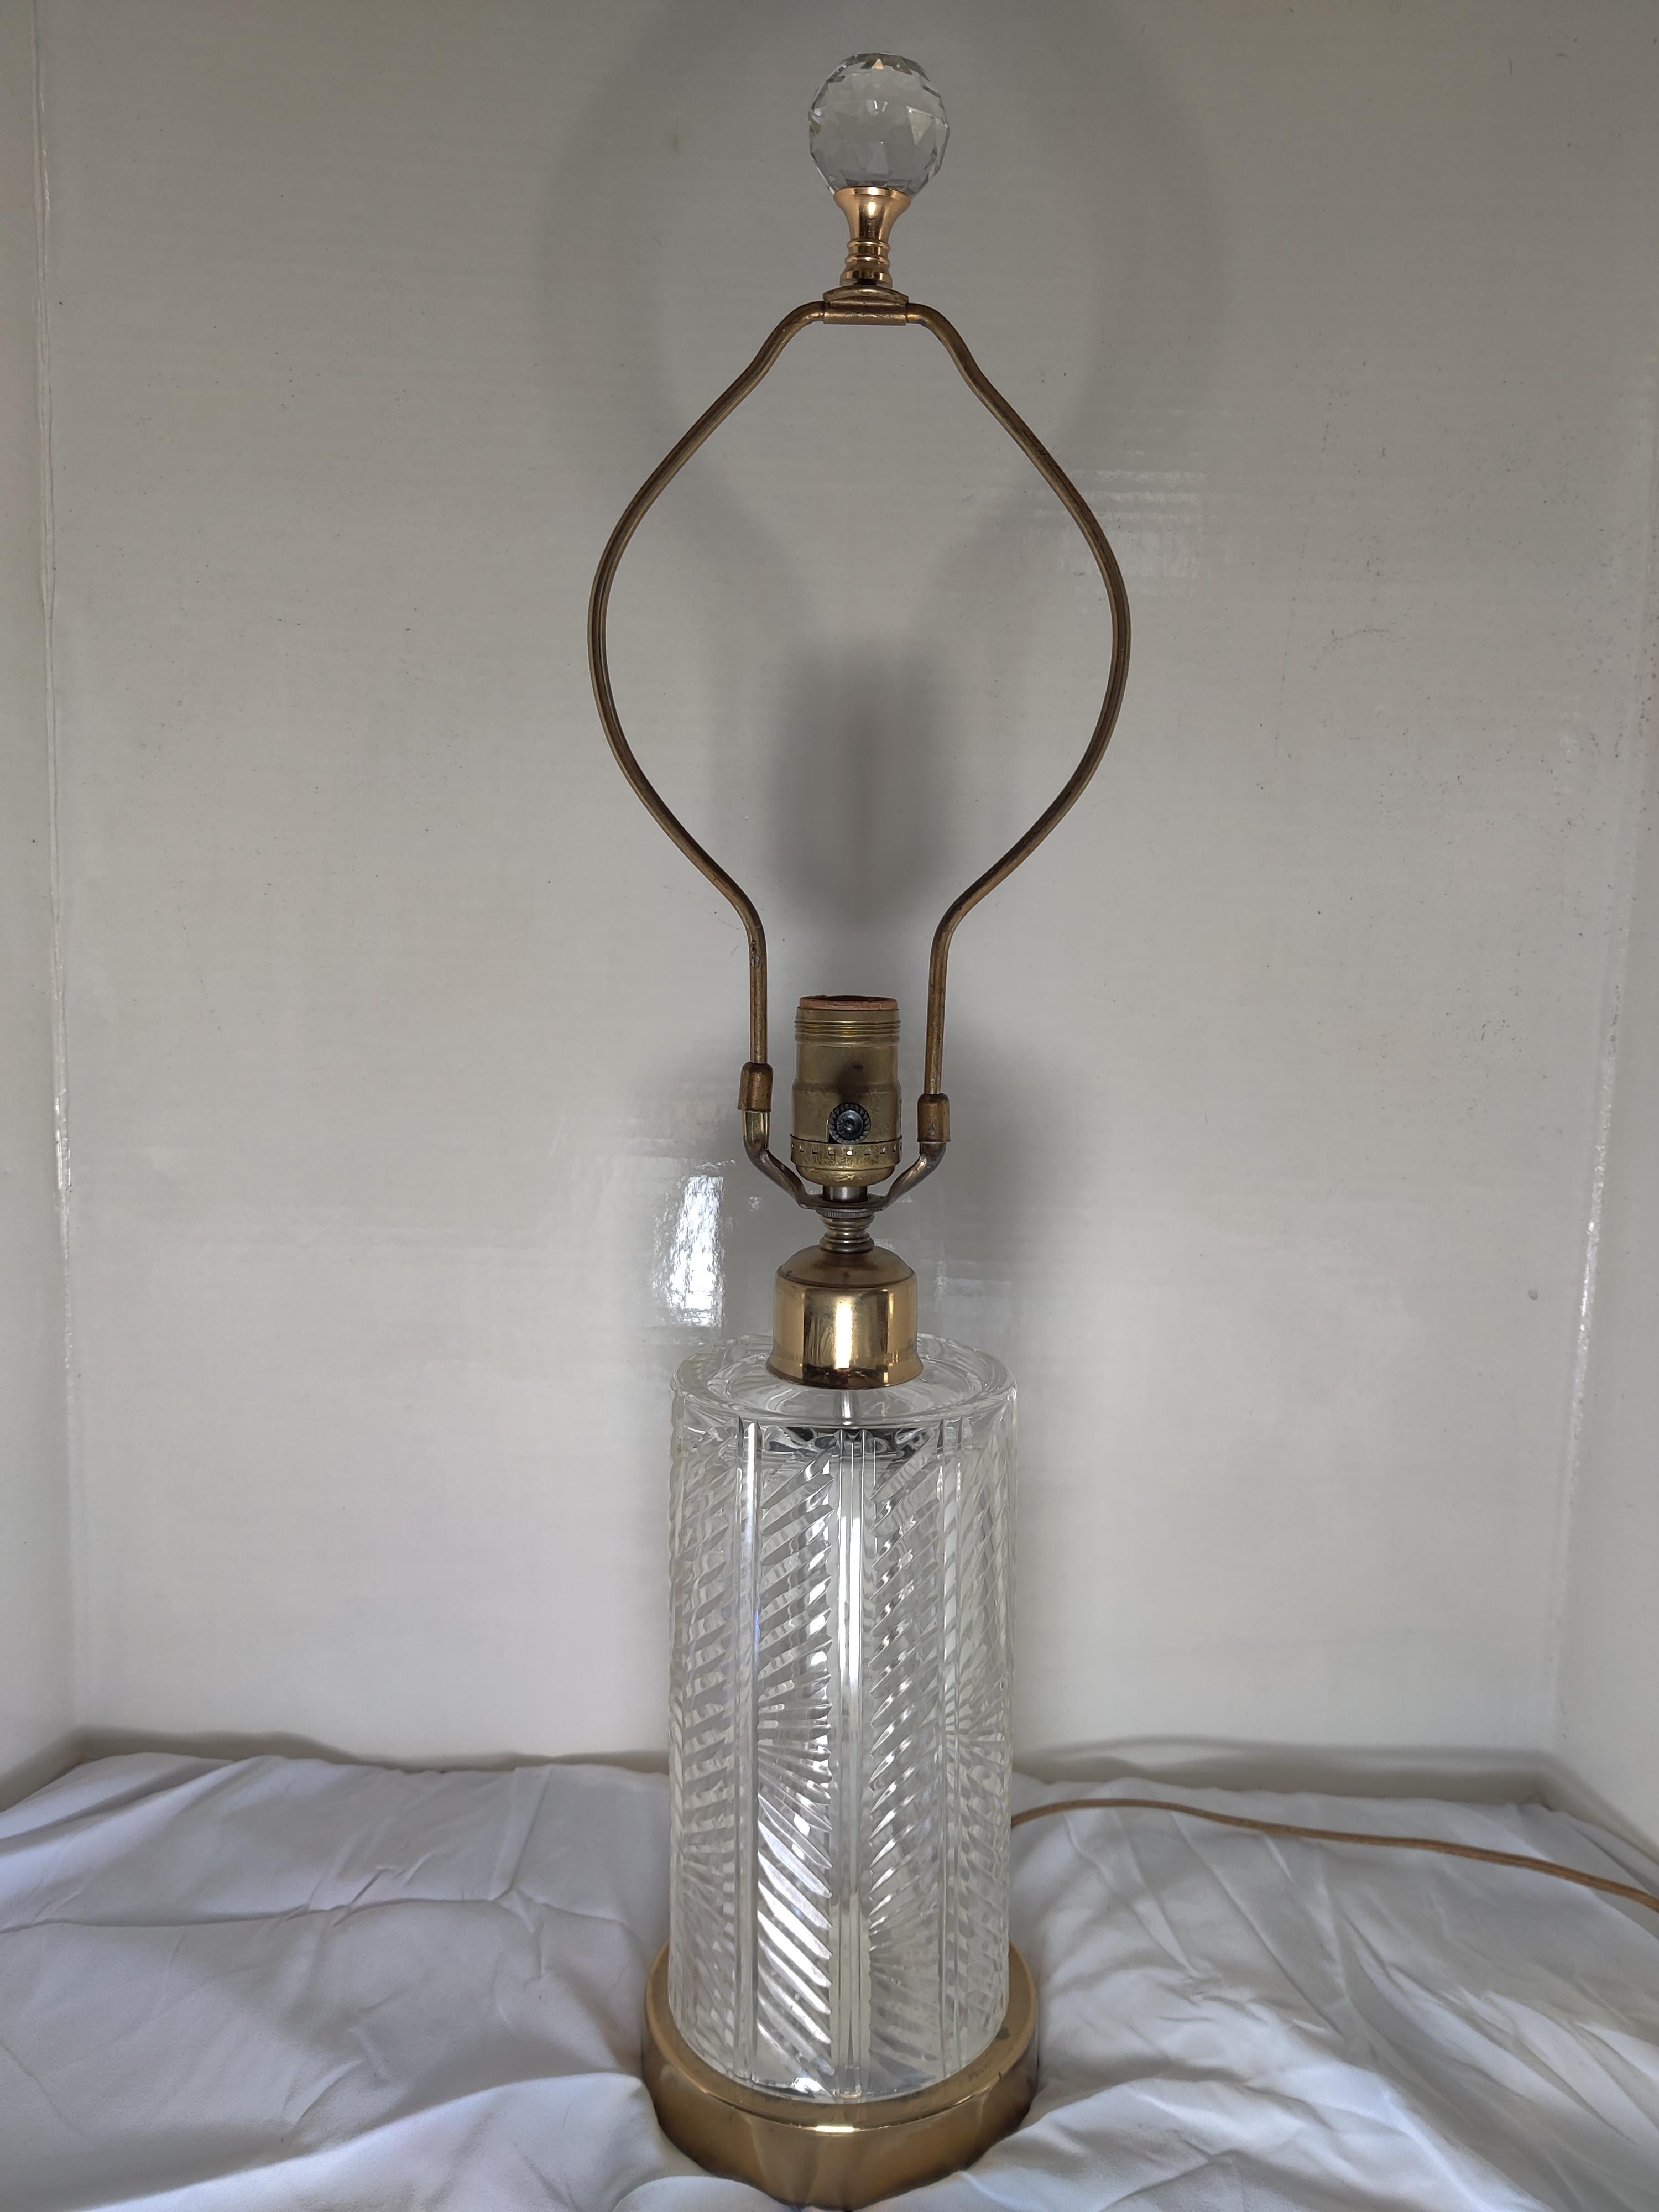 waterford lamp finial